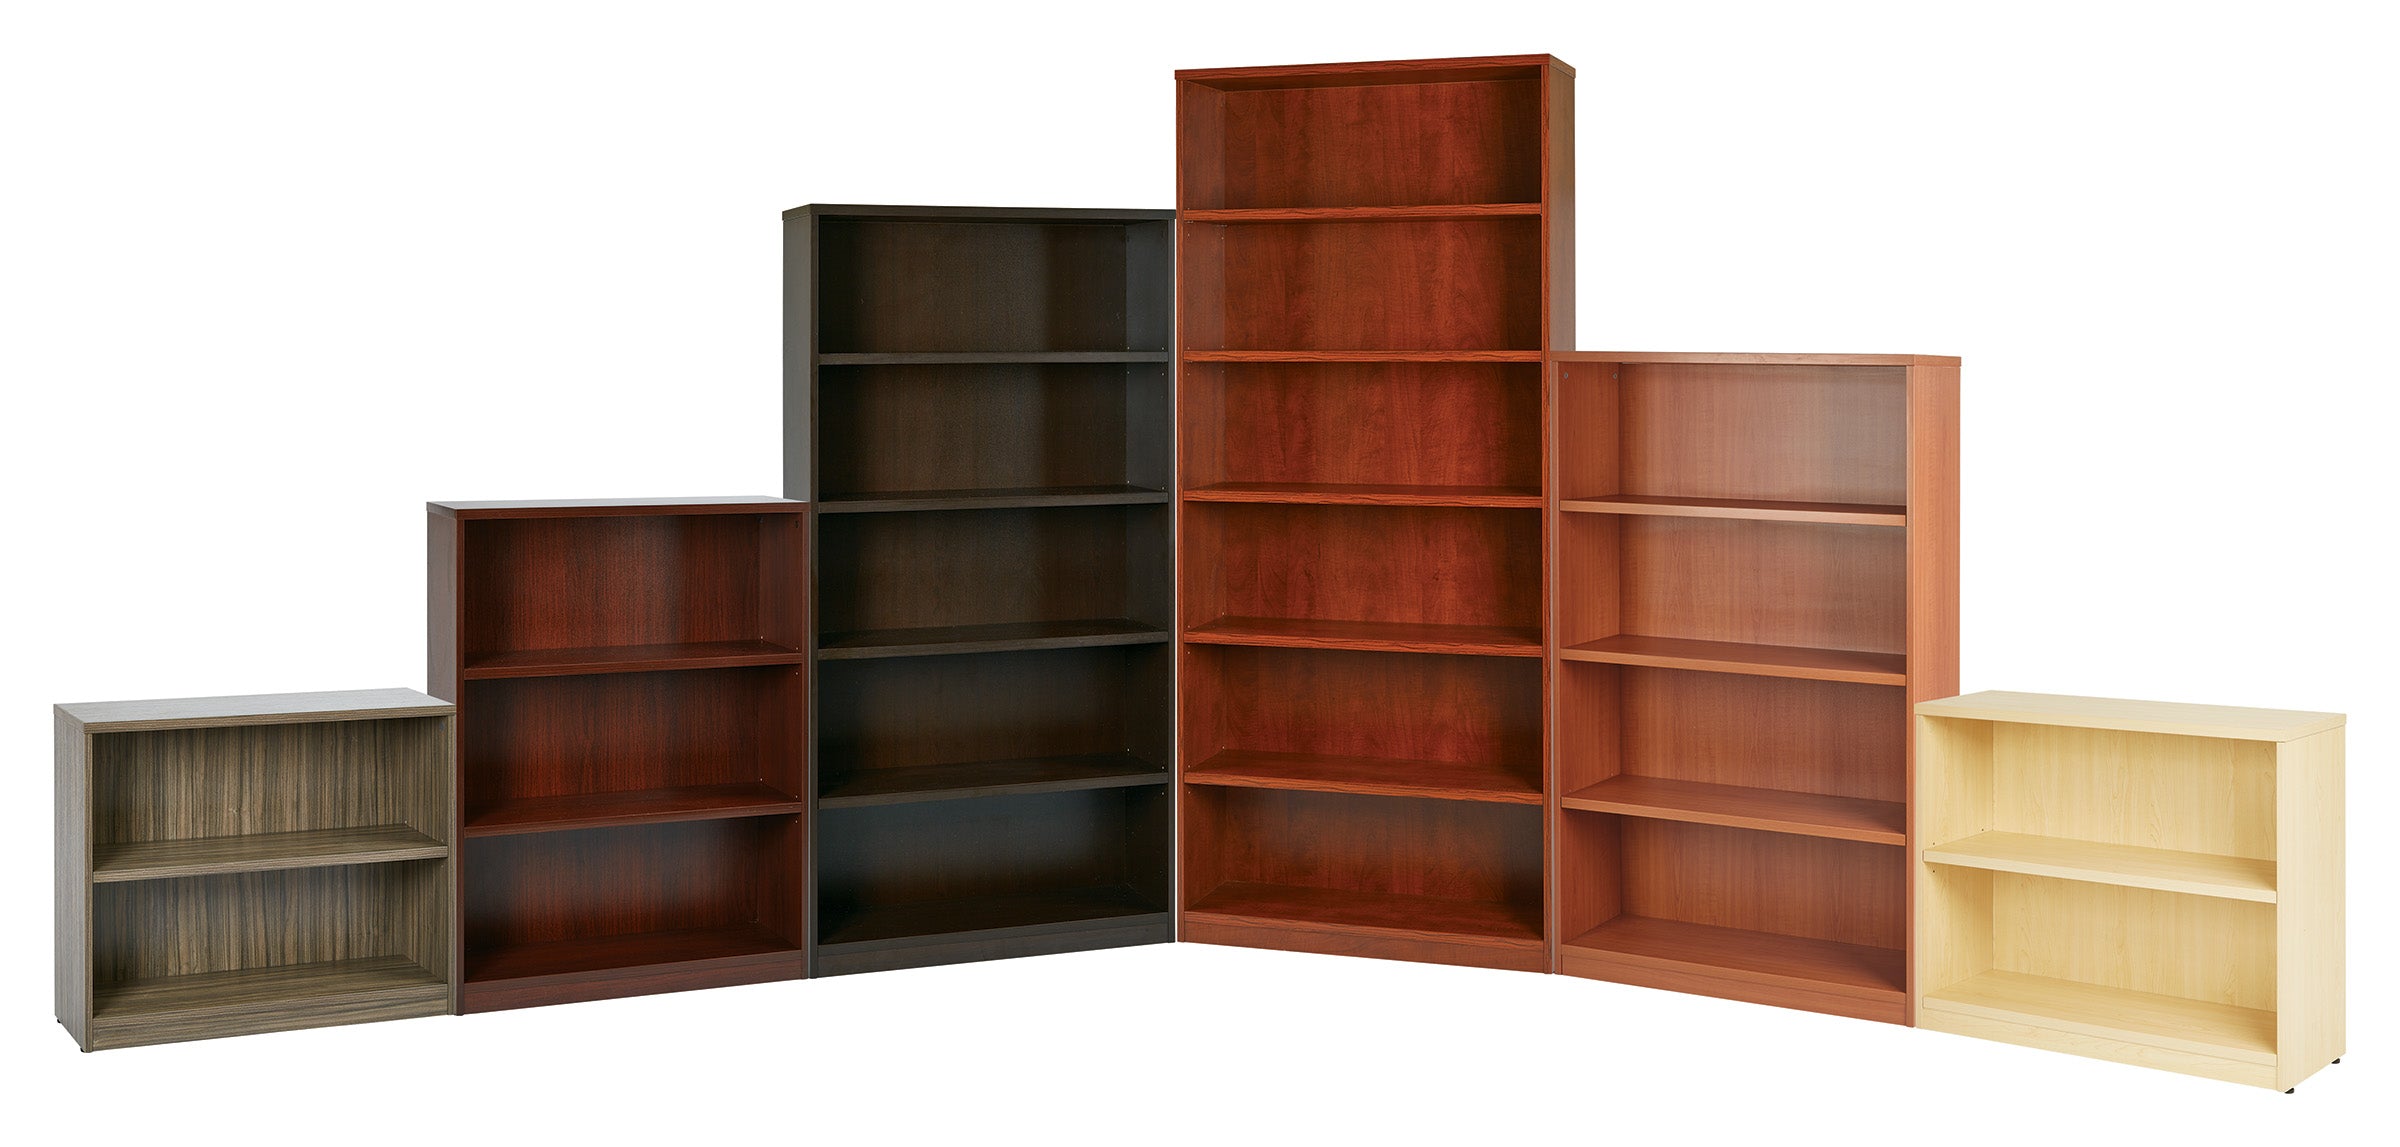 LBC - Laminate 2-6 Shelf Bookcases by OSP